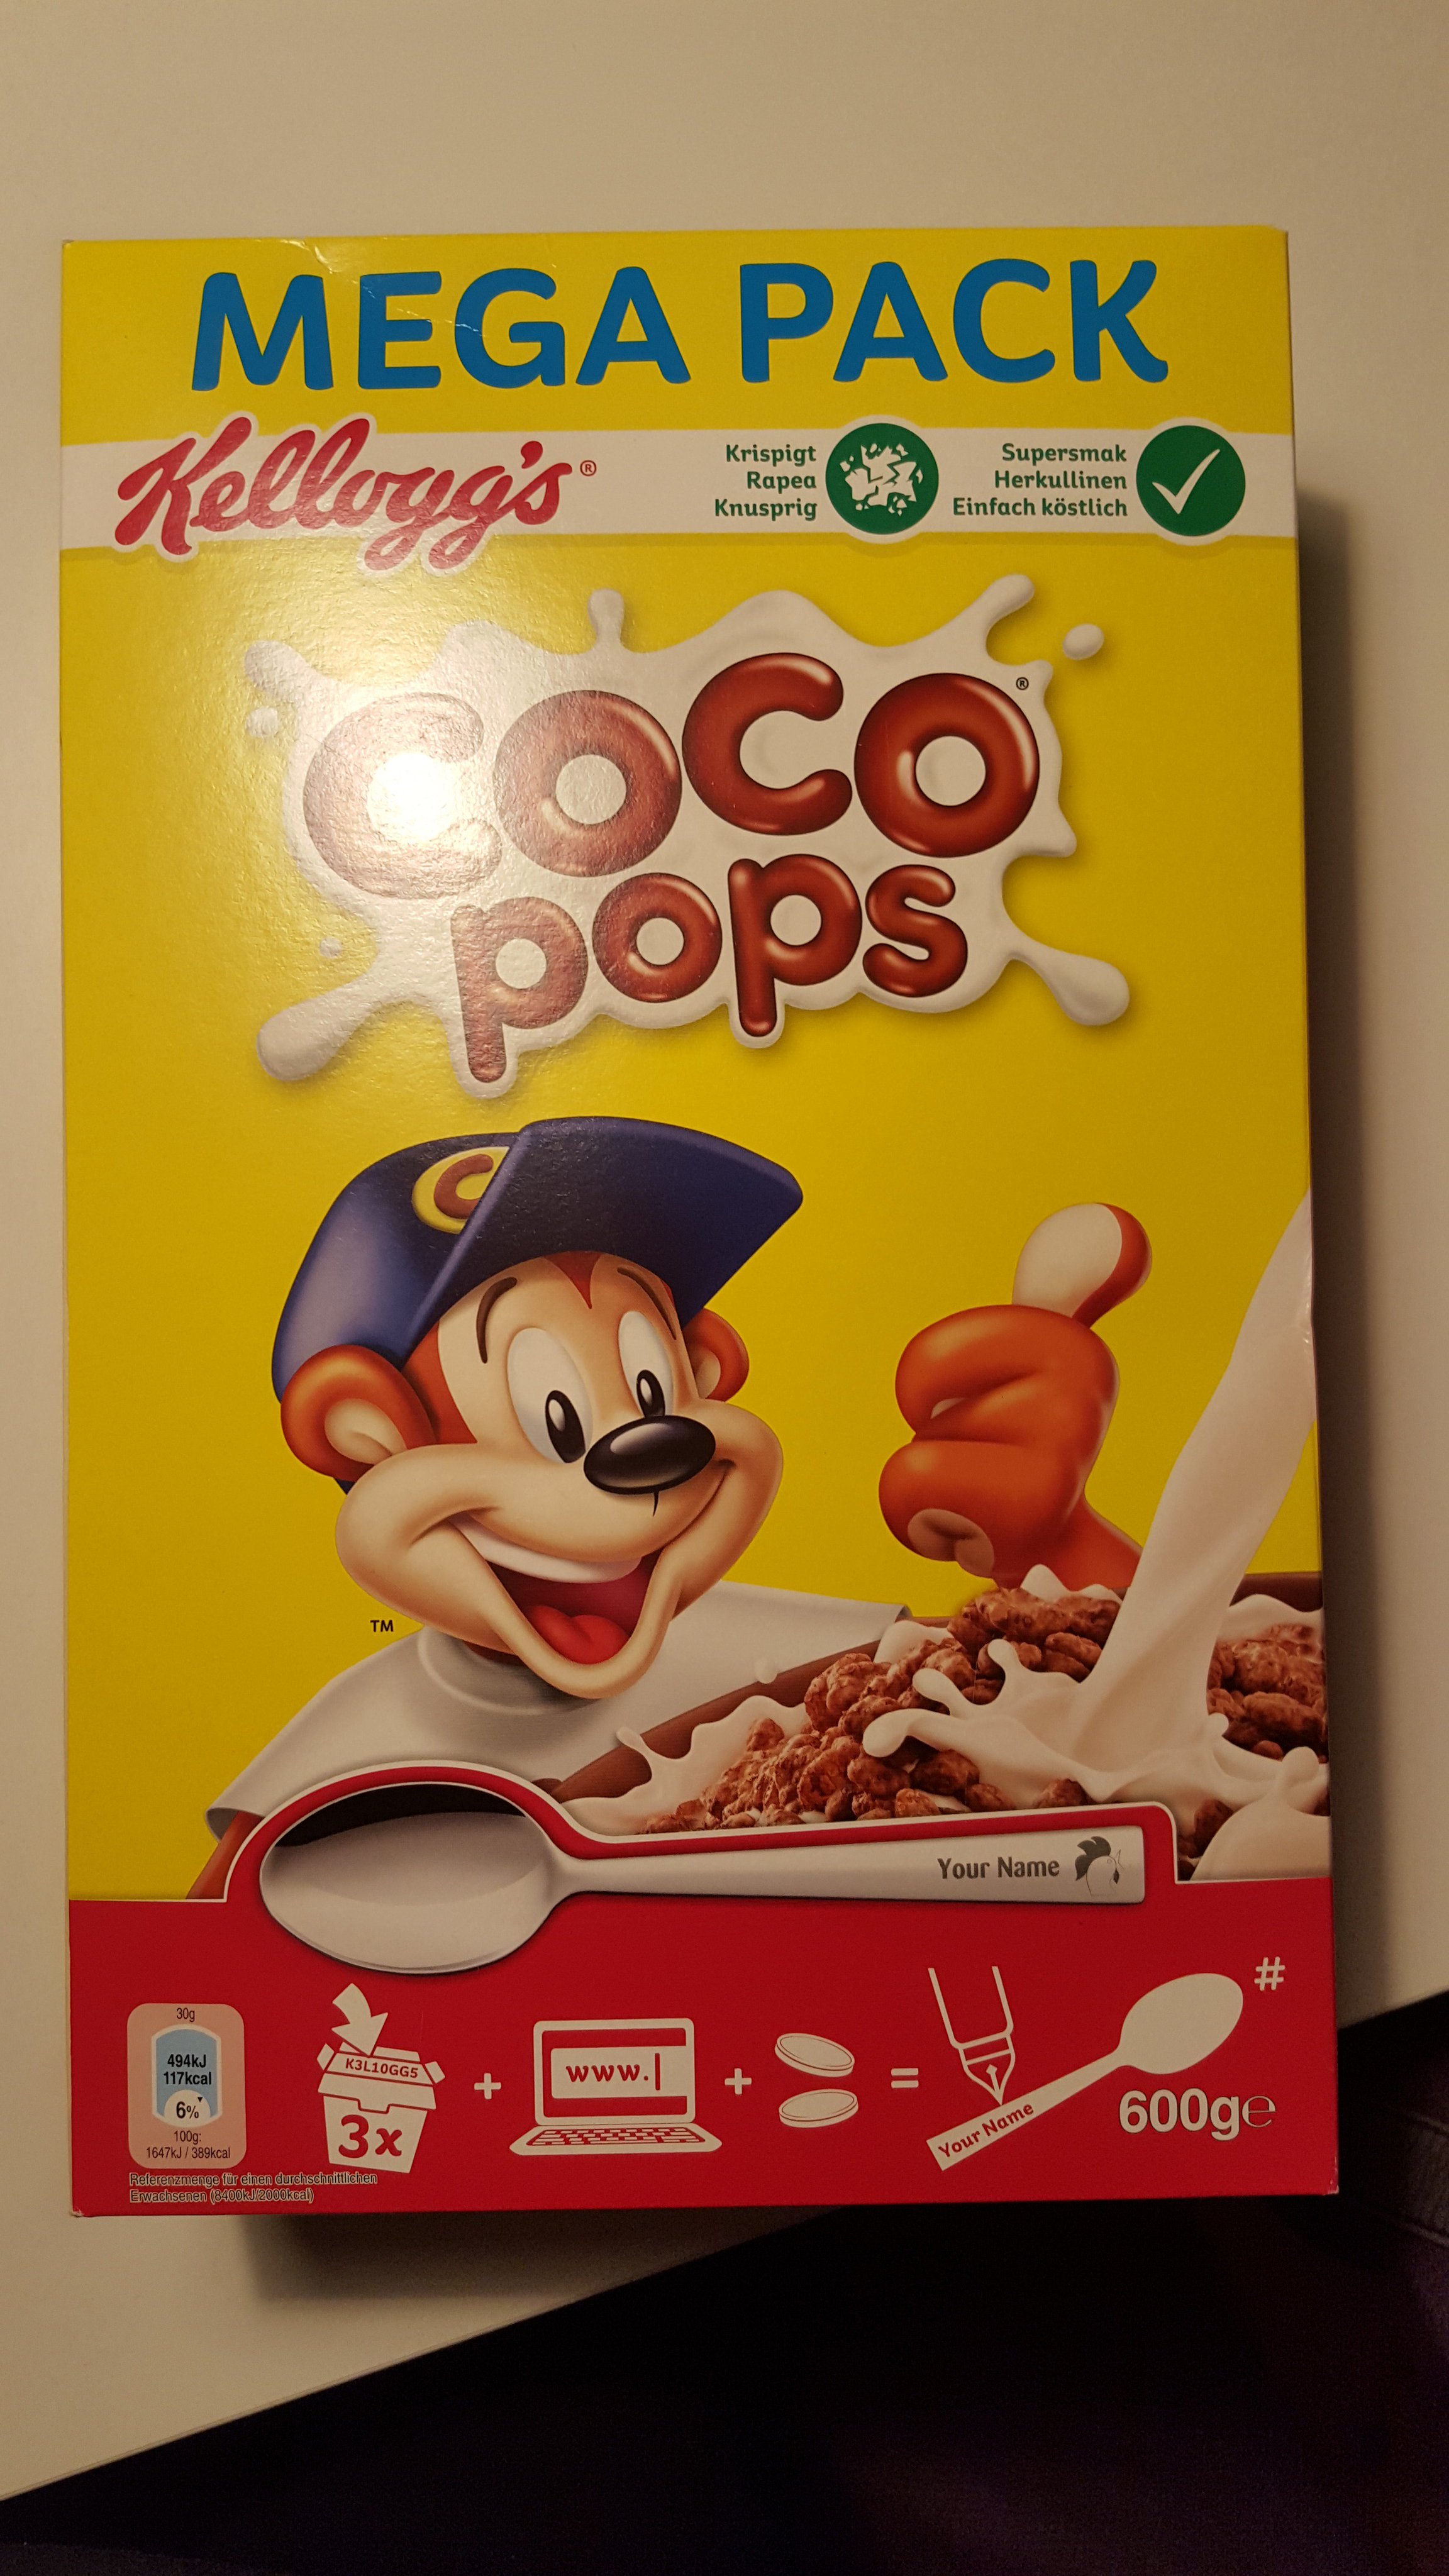 Tine al Twitter: "Coco Pops mega pack, find dem i Netto. #servicetweet #detvarsålidt https://t.co/i8XrYqXJHv" Twitter